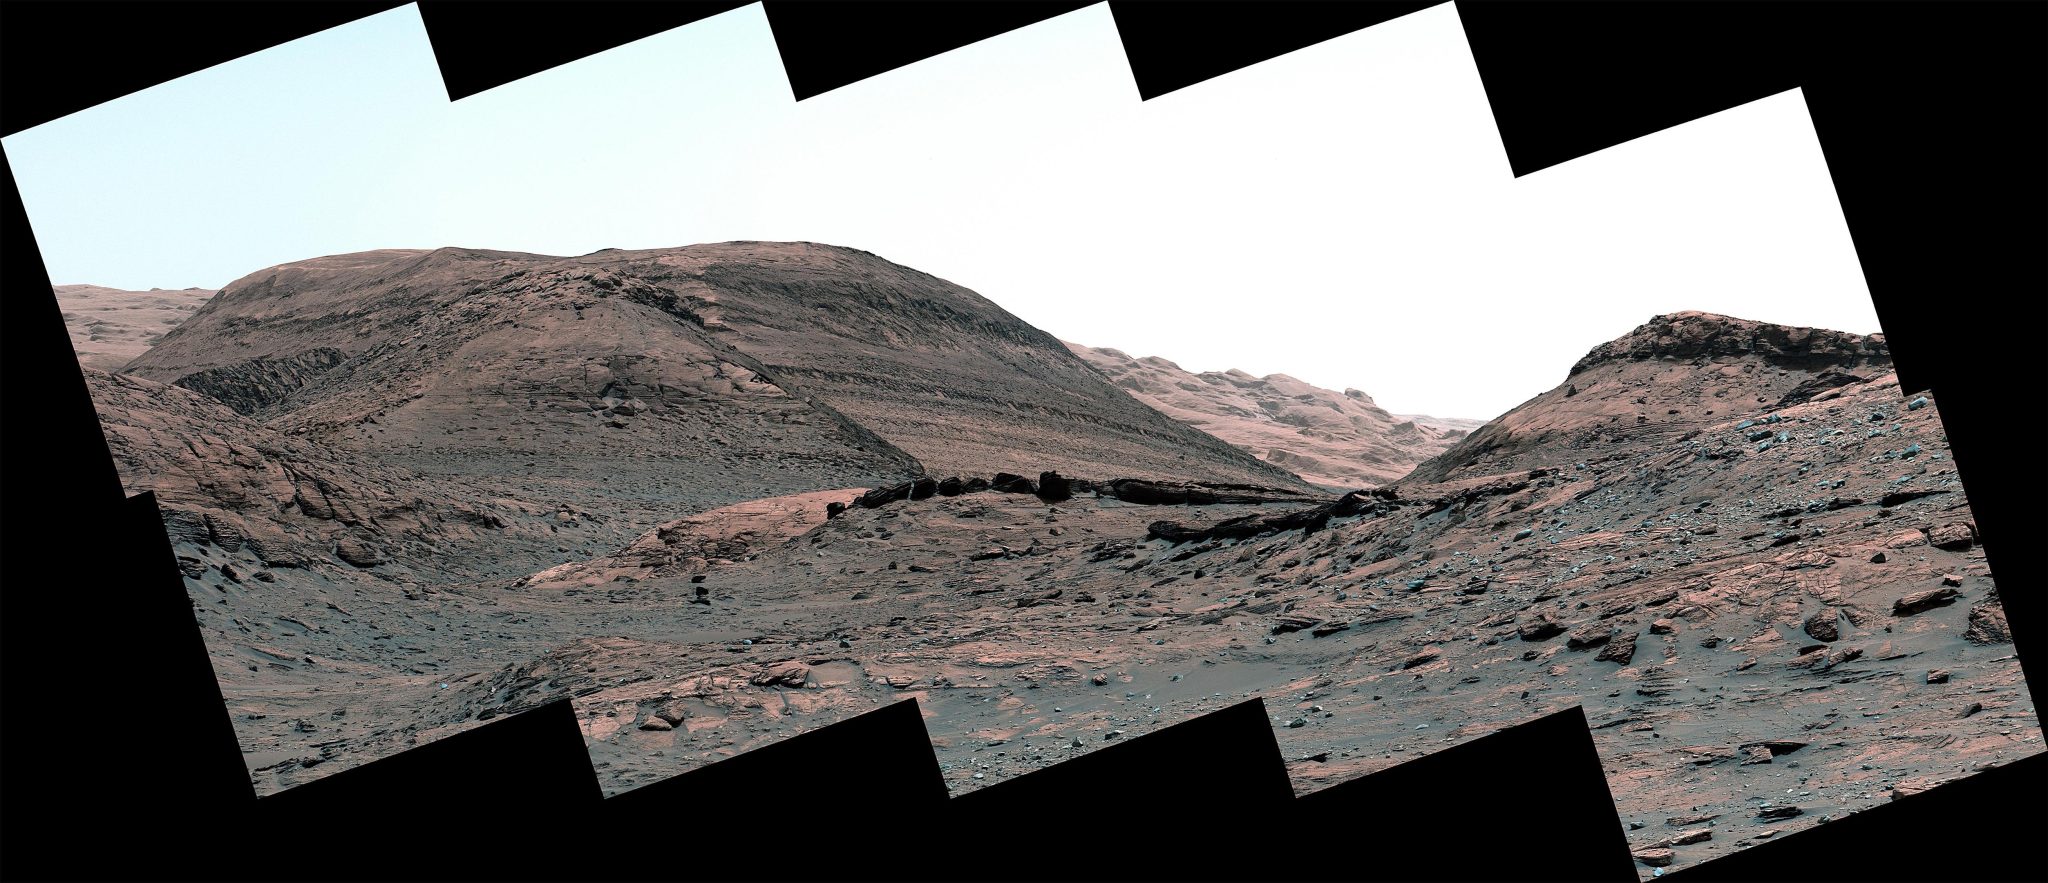 Curiosity Mars Rover sulfate storage region